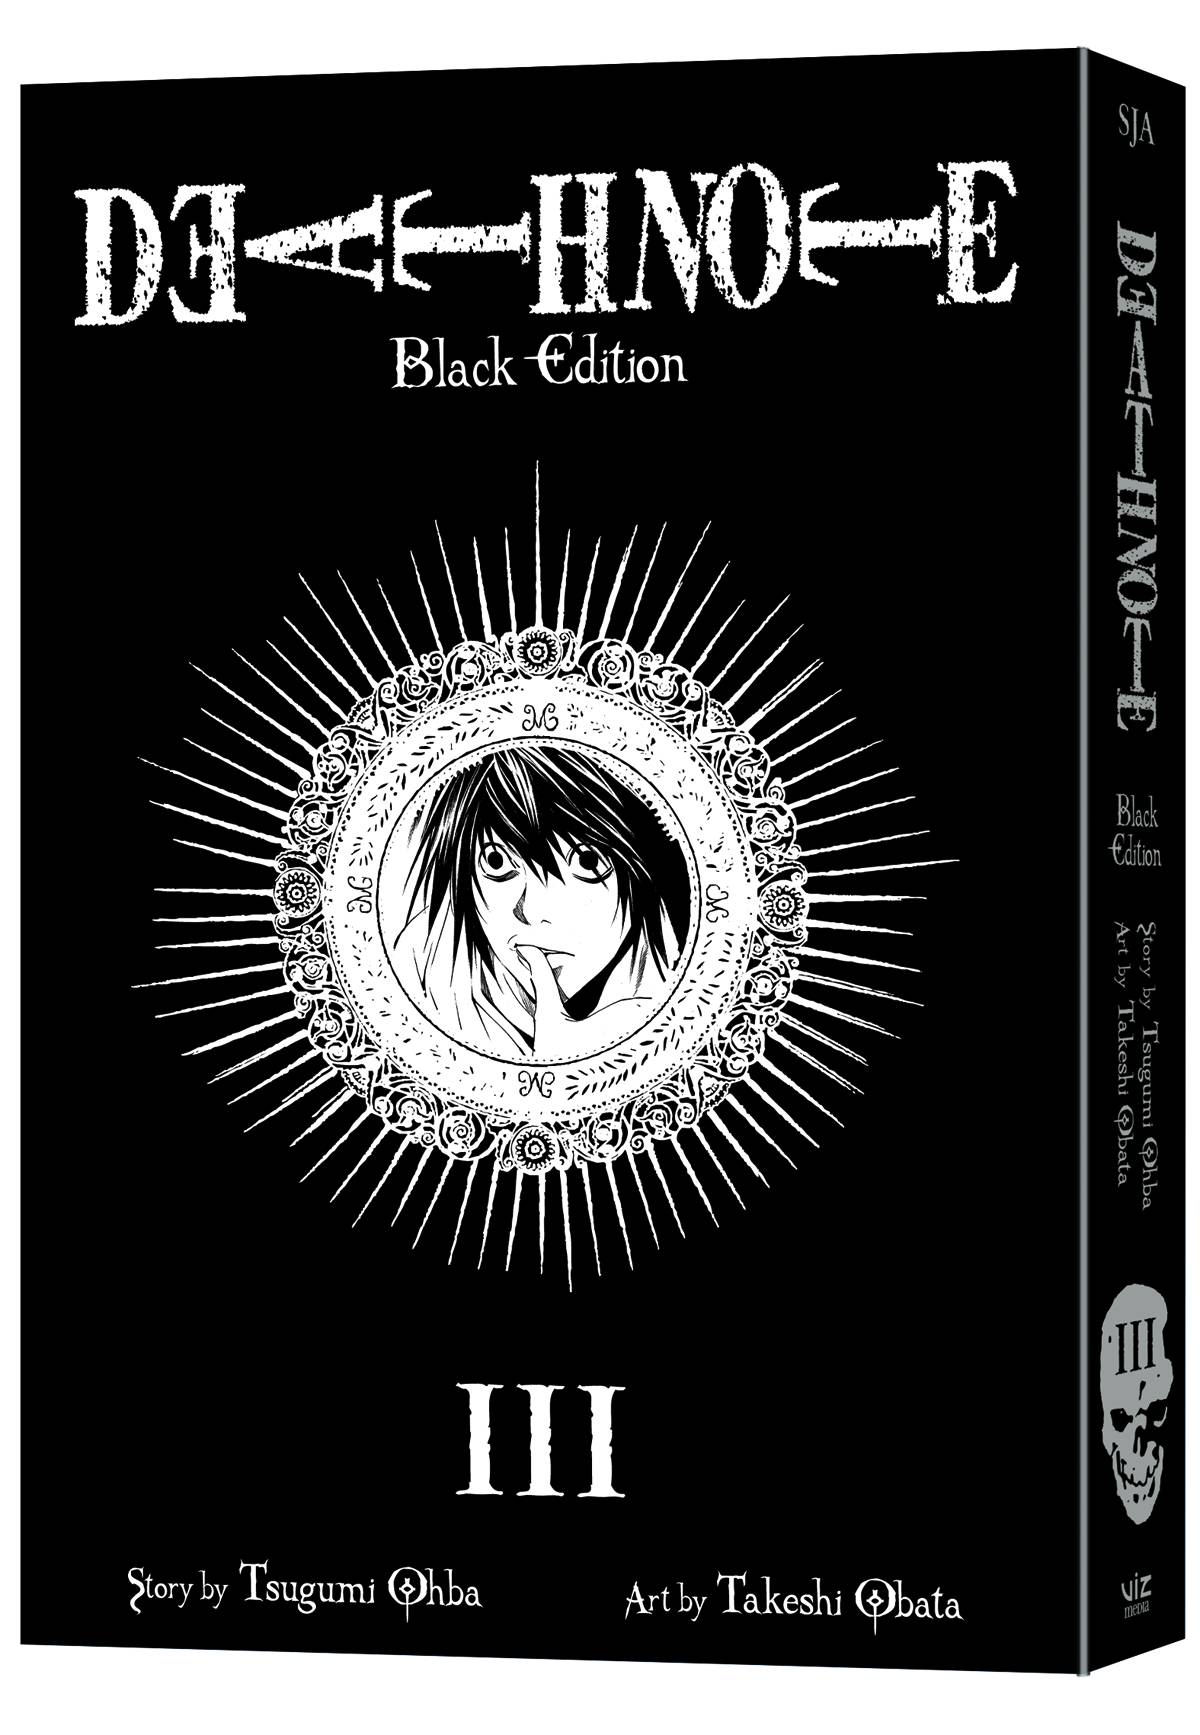 Black Bullet, Vol. 3 - manga (Black Bullet (manga), 3) (Volume 3)